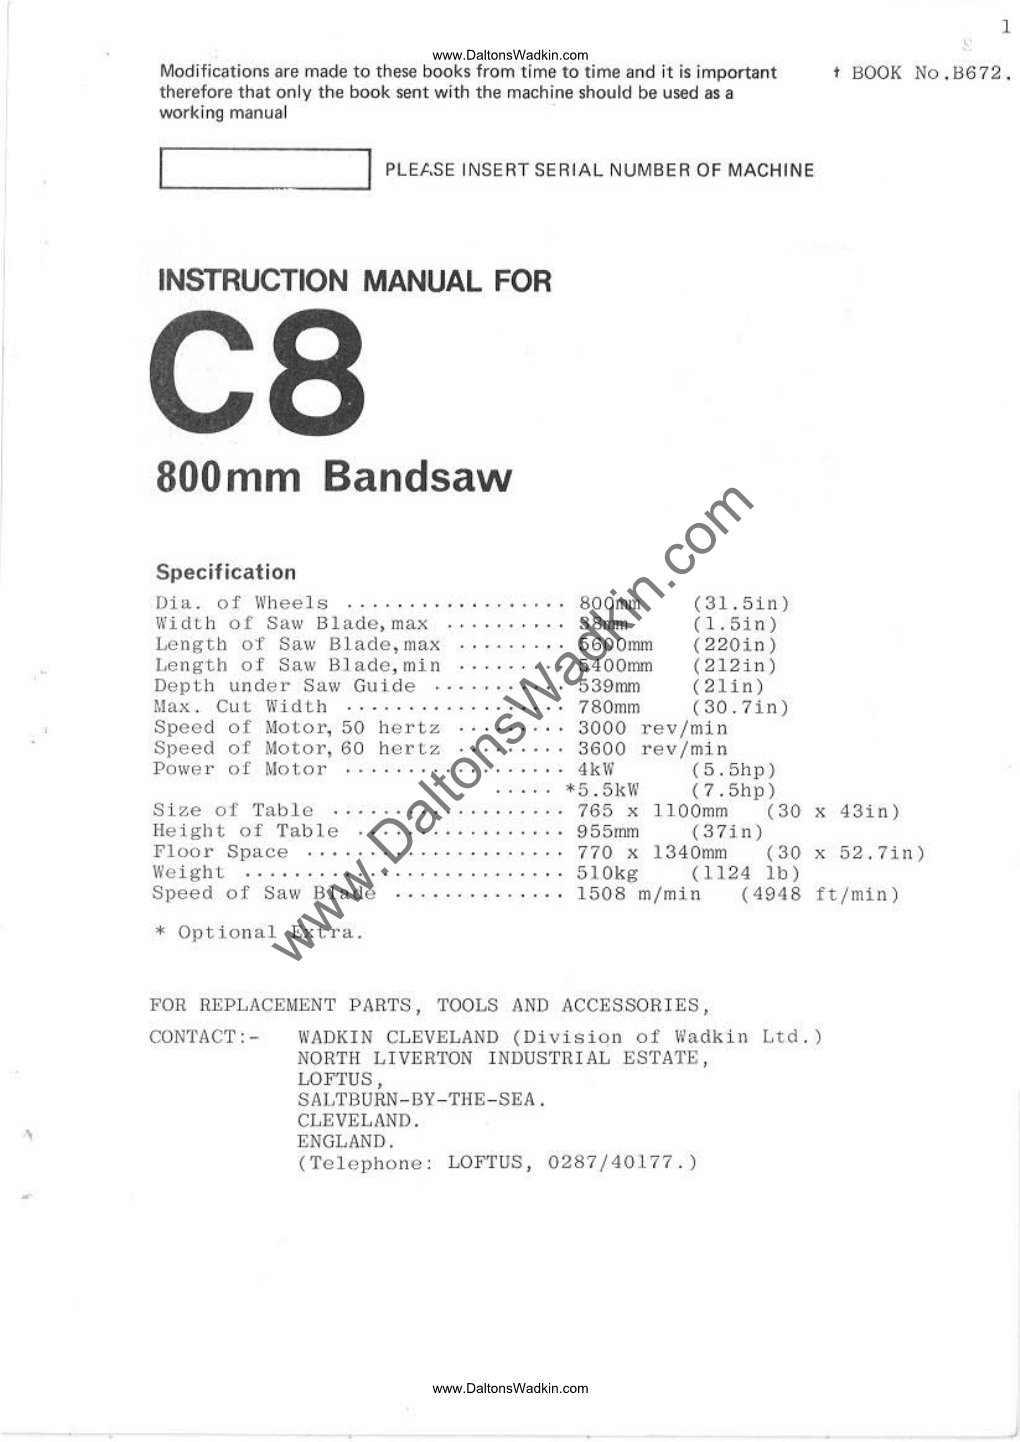 Wadkin C8 Bandsaw Manual & Parts List